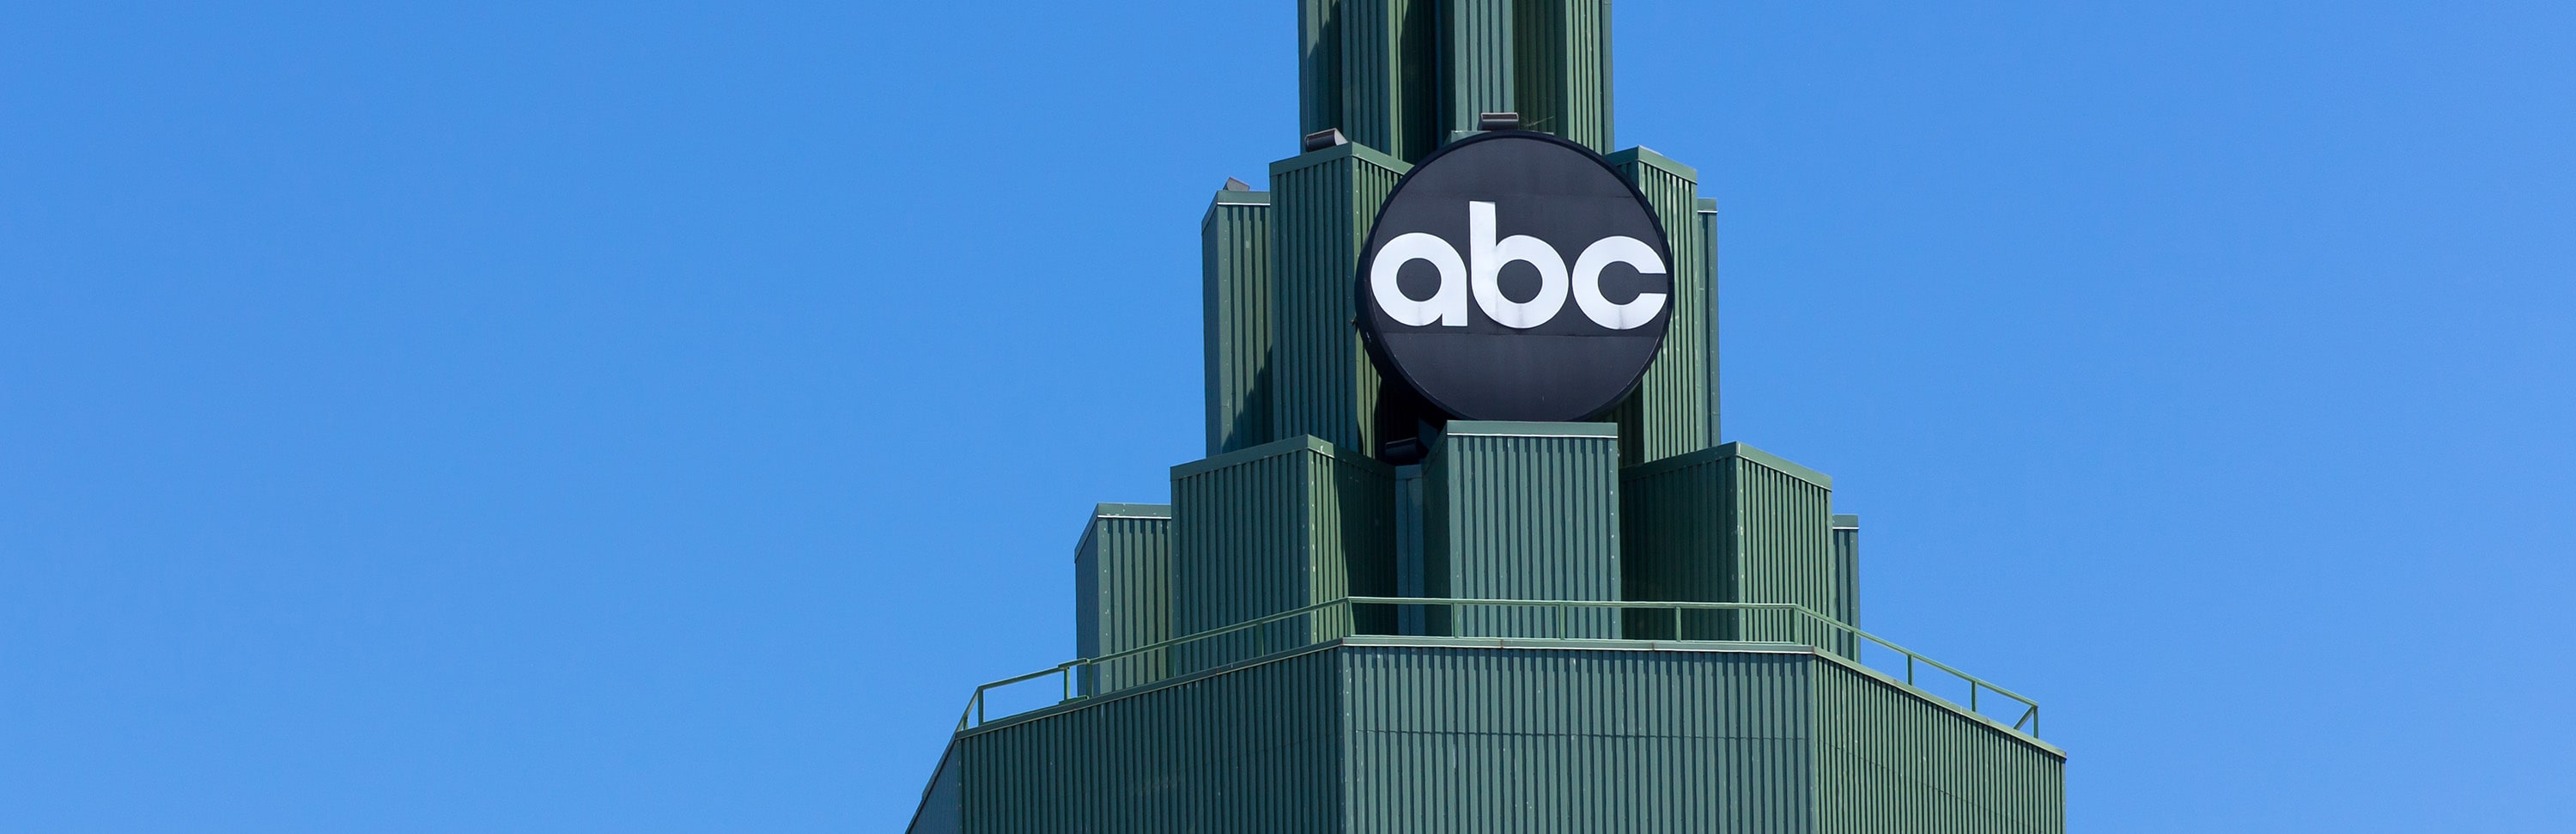 ABC News Internship Program